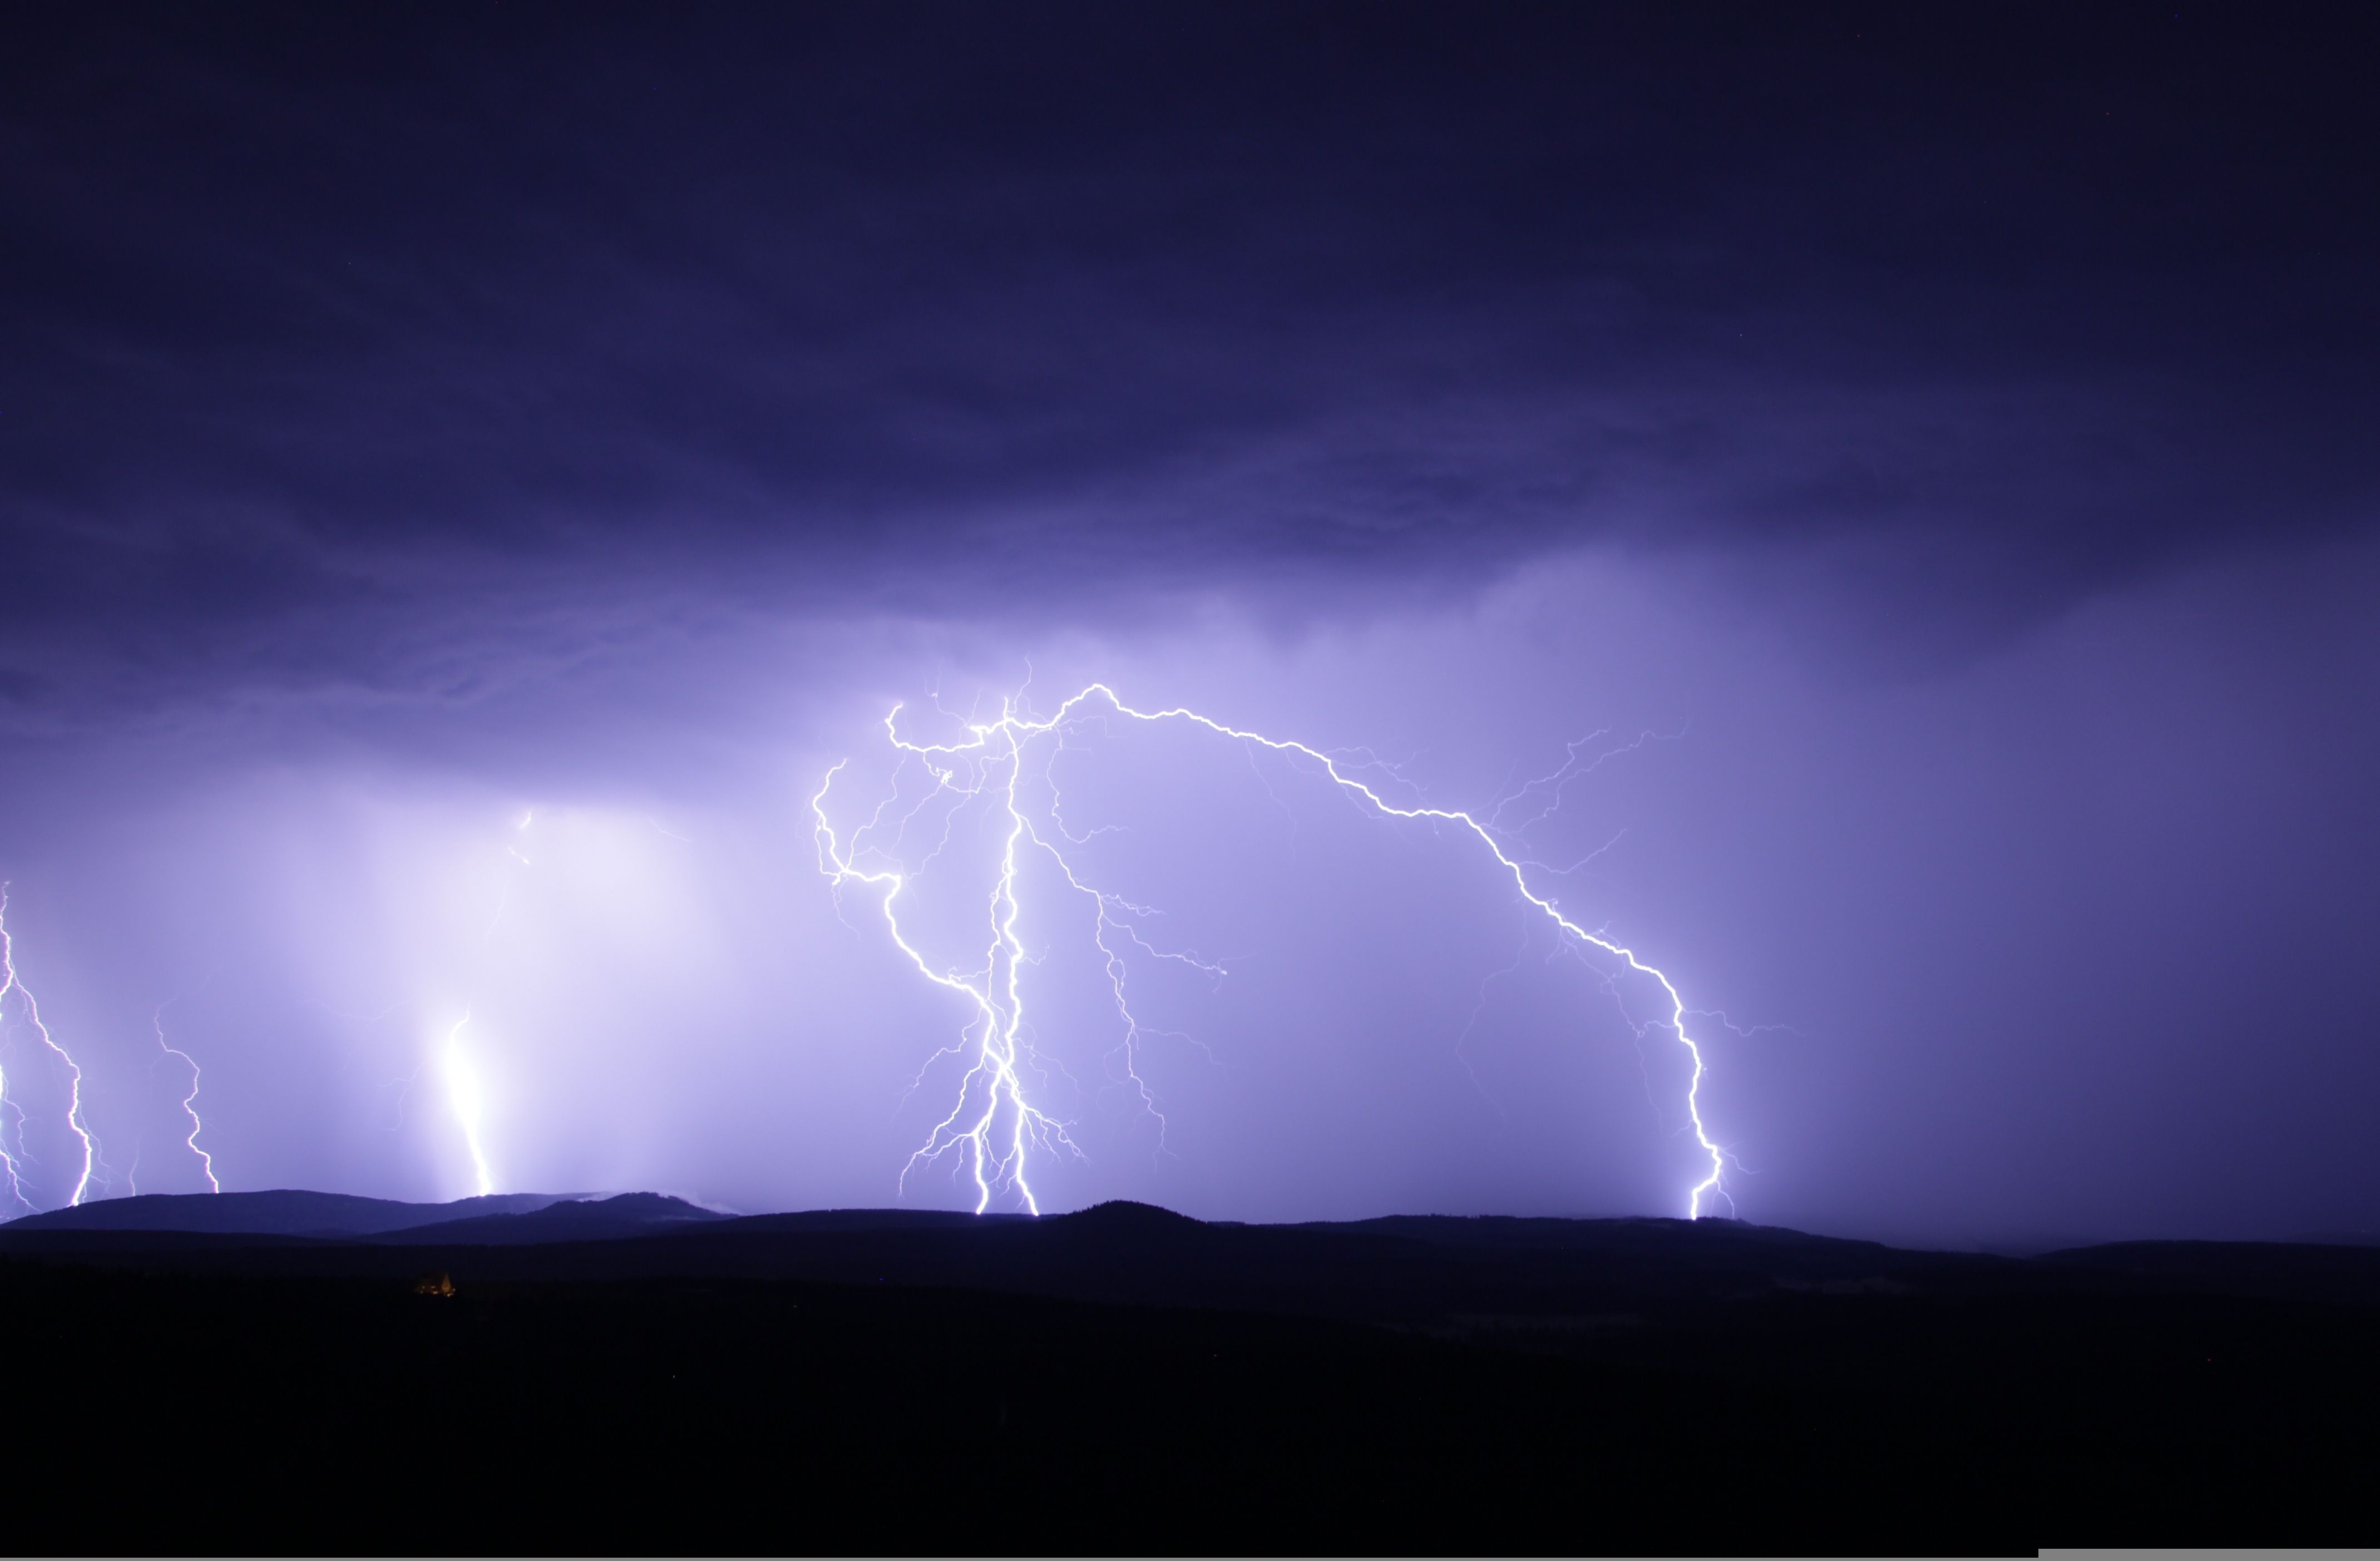 A thunderstorm at night with lightening strikes illuminating the sky